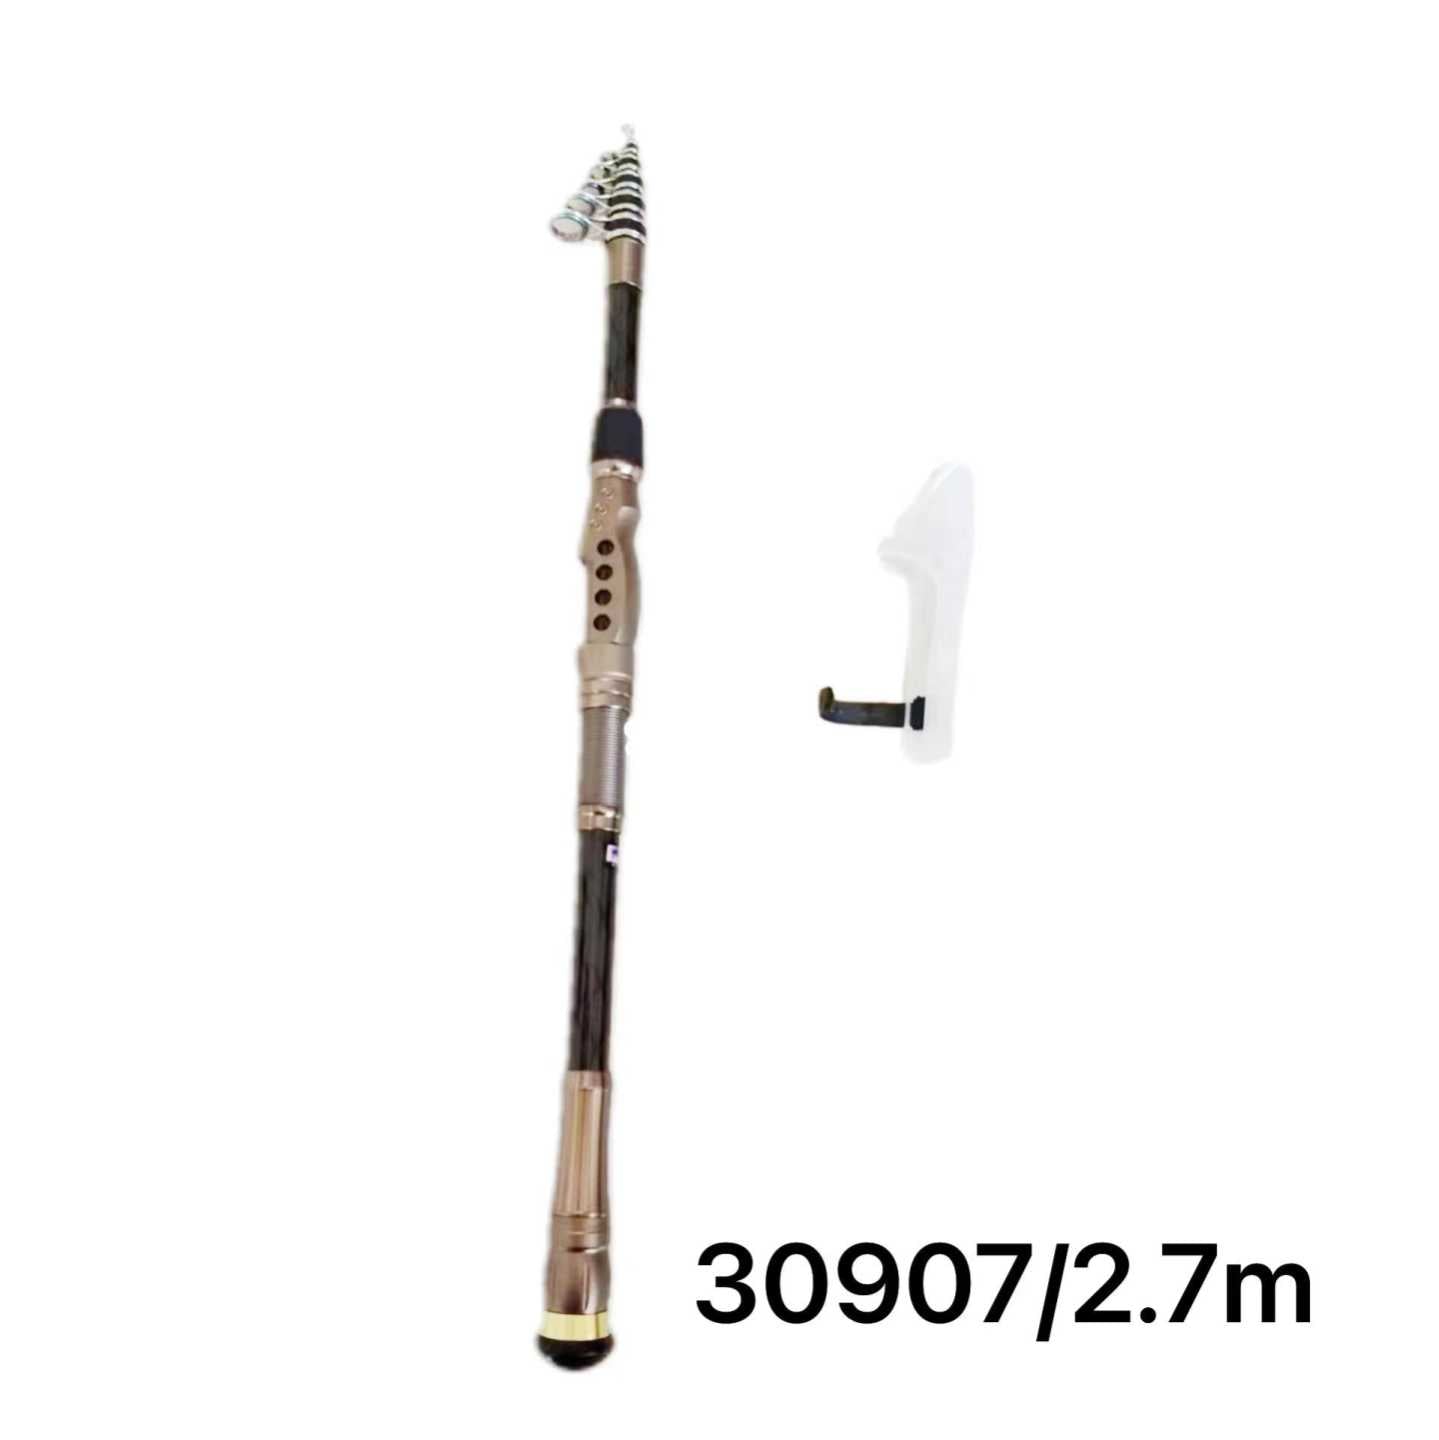 Fishing rod - Telescopic - 2.7m - 30907